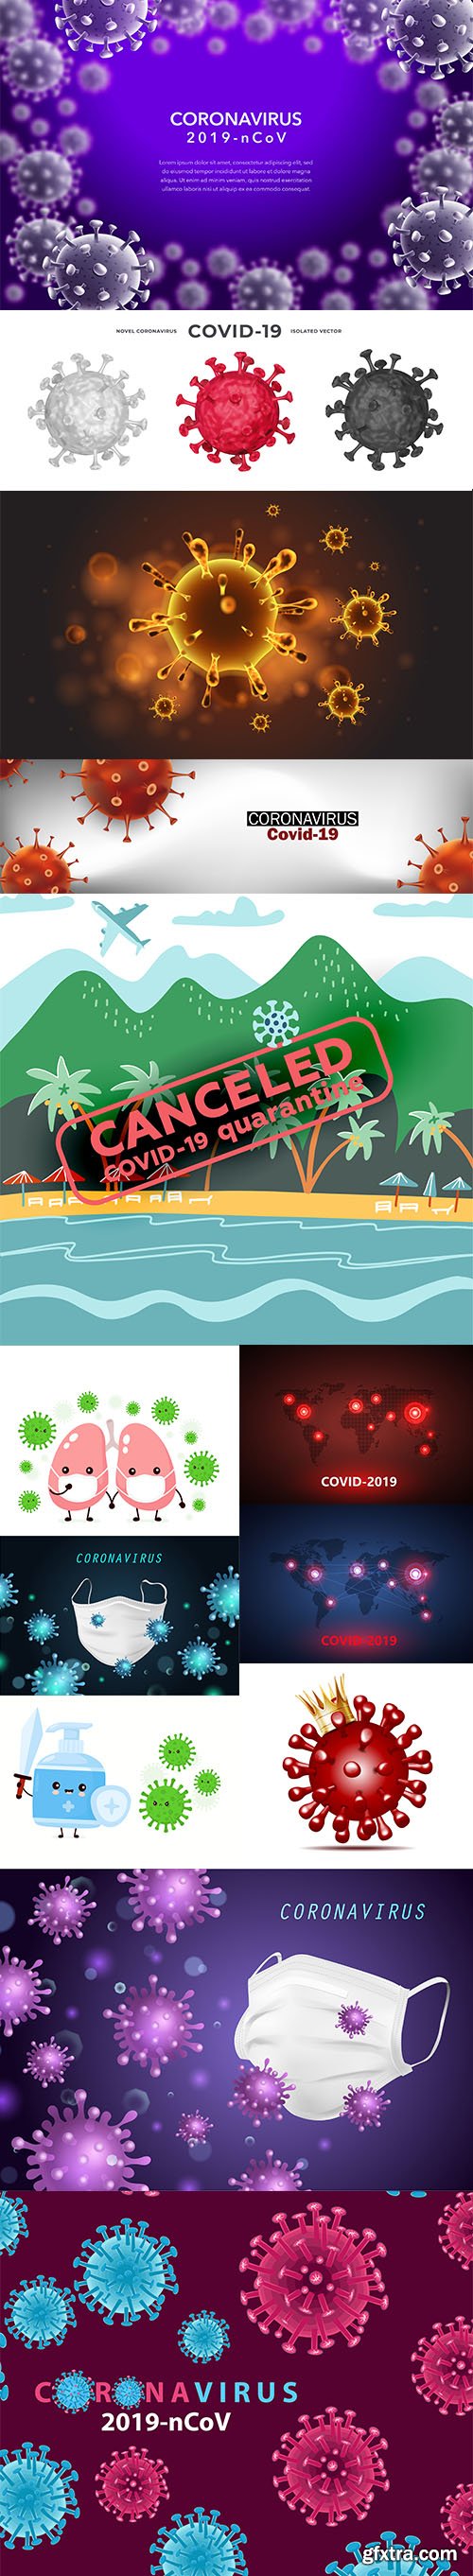 Coronavirus Covid-19 Virus Big Illustration Bundle Vol 3